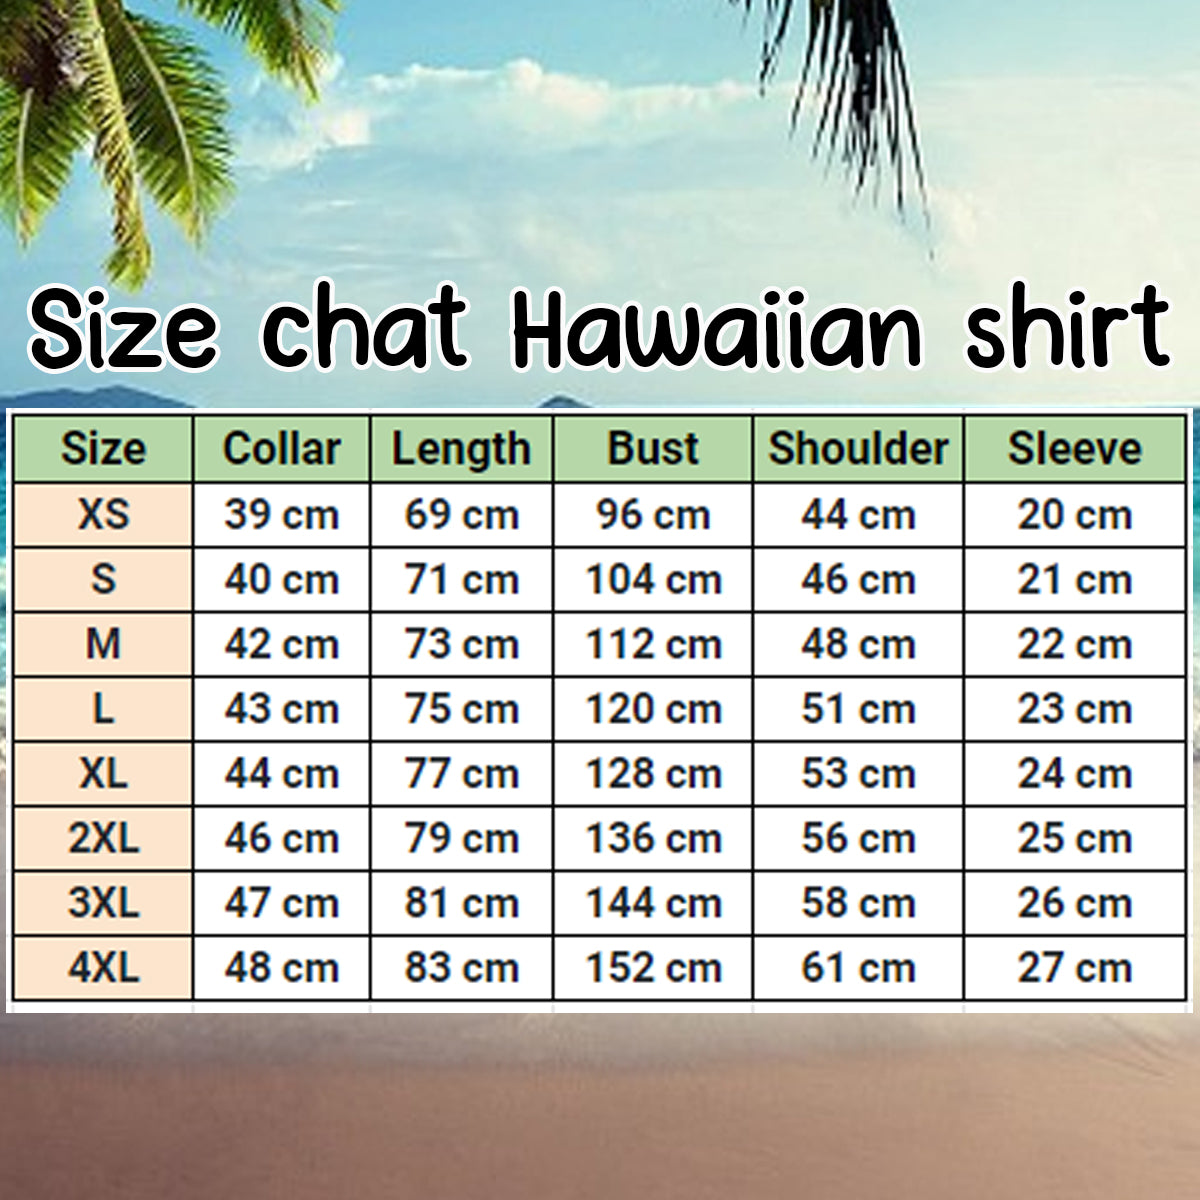 Cute Black Schipperke Dog Tropical Plant Hawaiian Shirt/ Summer aloha hawaii shirt for Men women